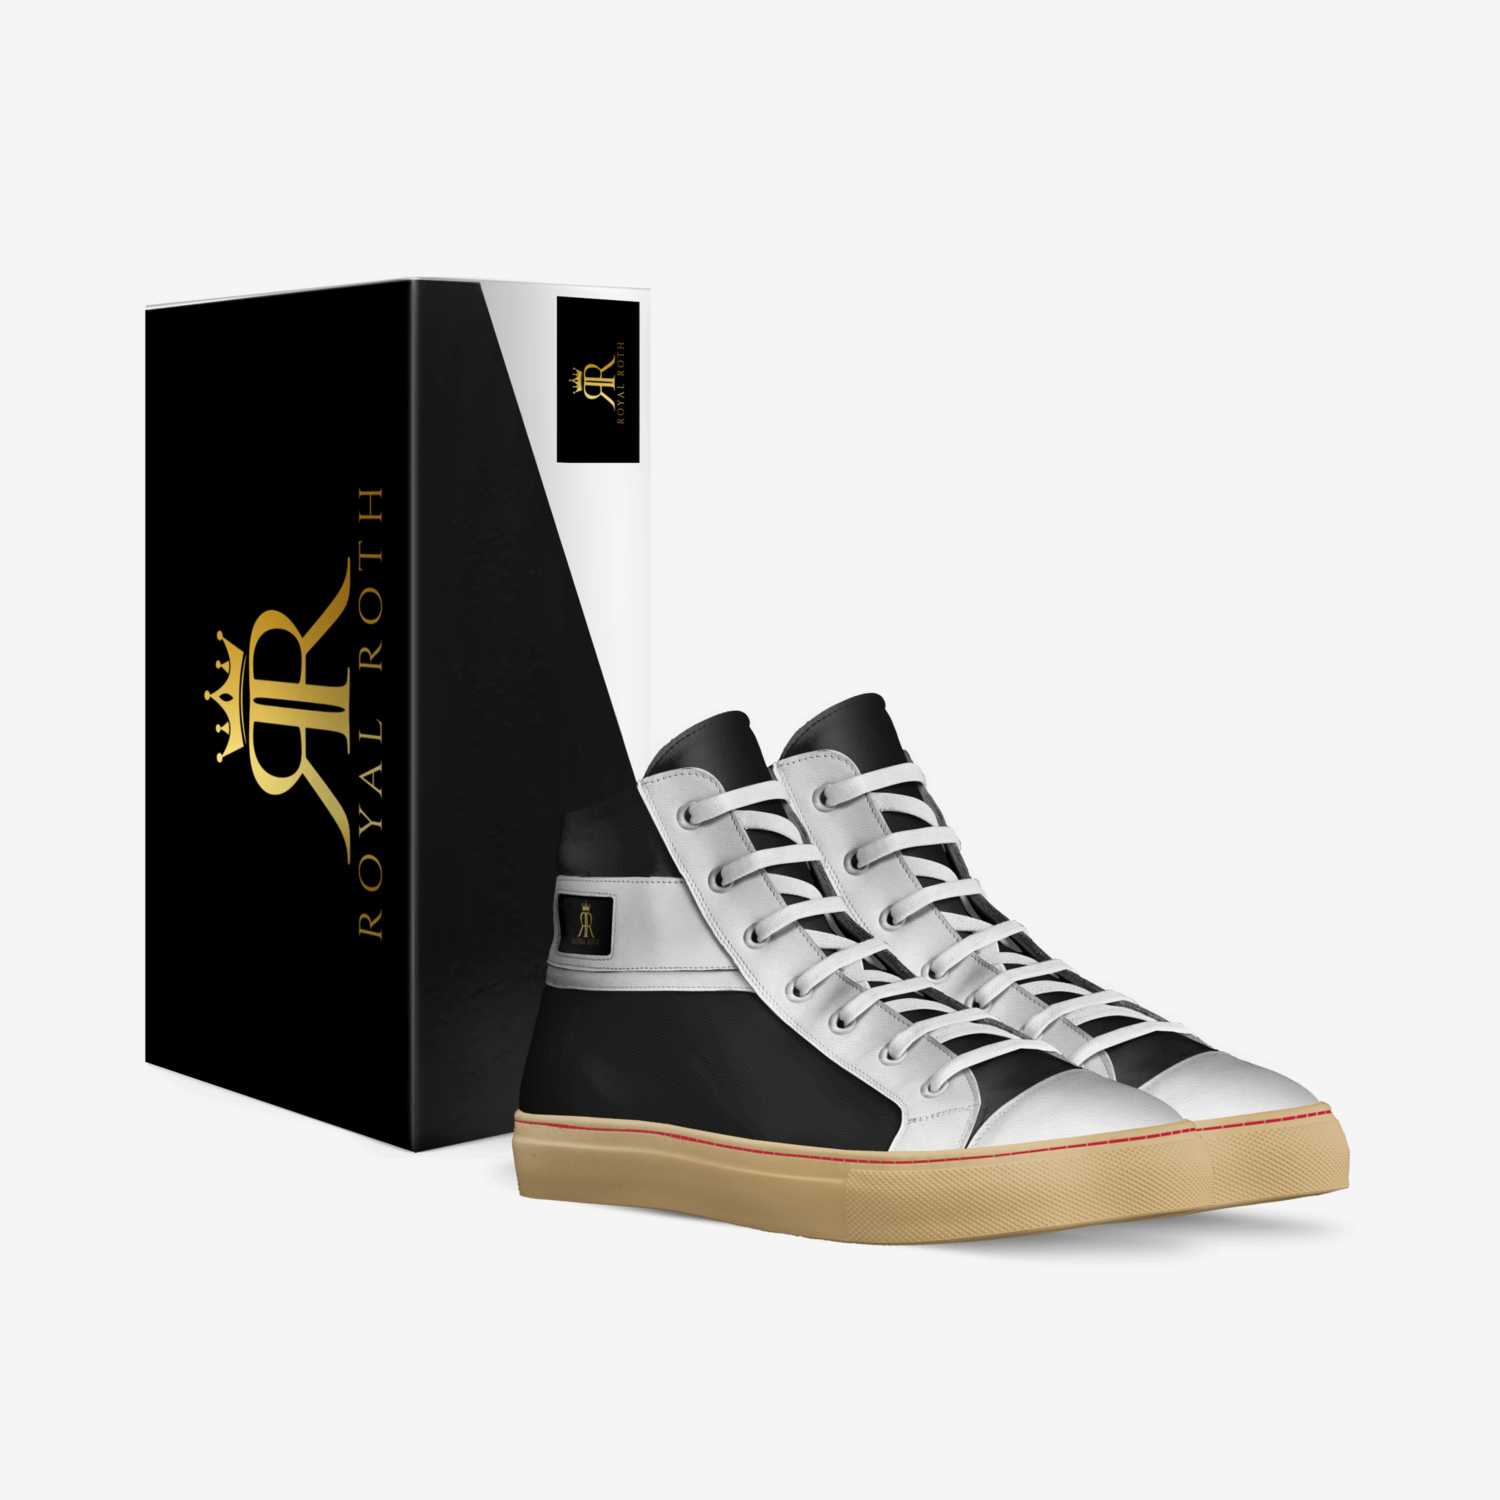 Royal Walks custom made in Italy shoes by Cristina Raè | Box view